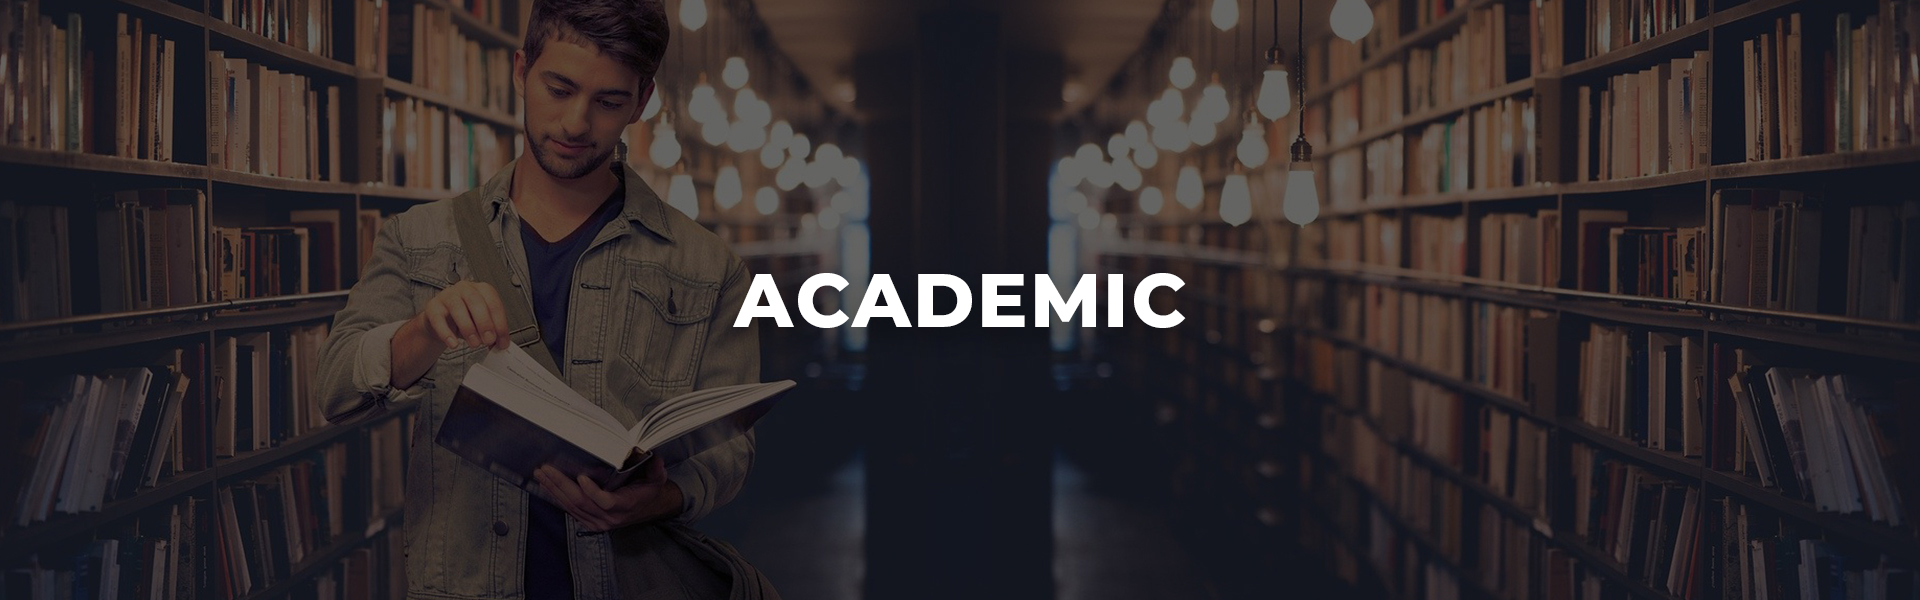 Sector académico